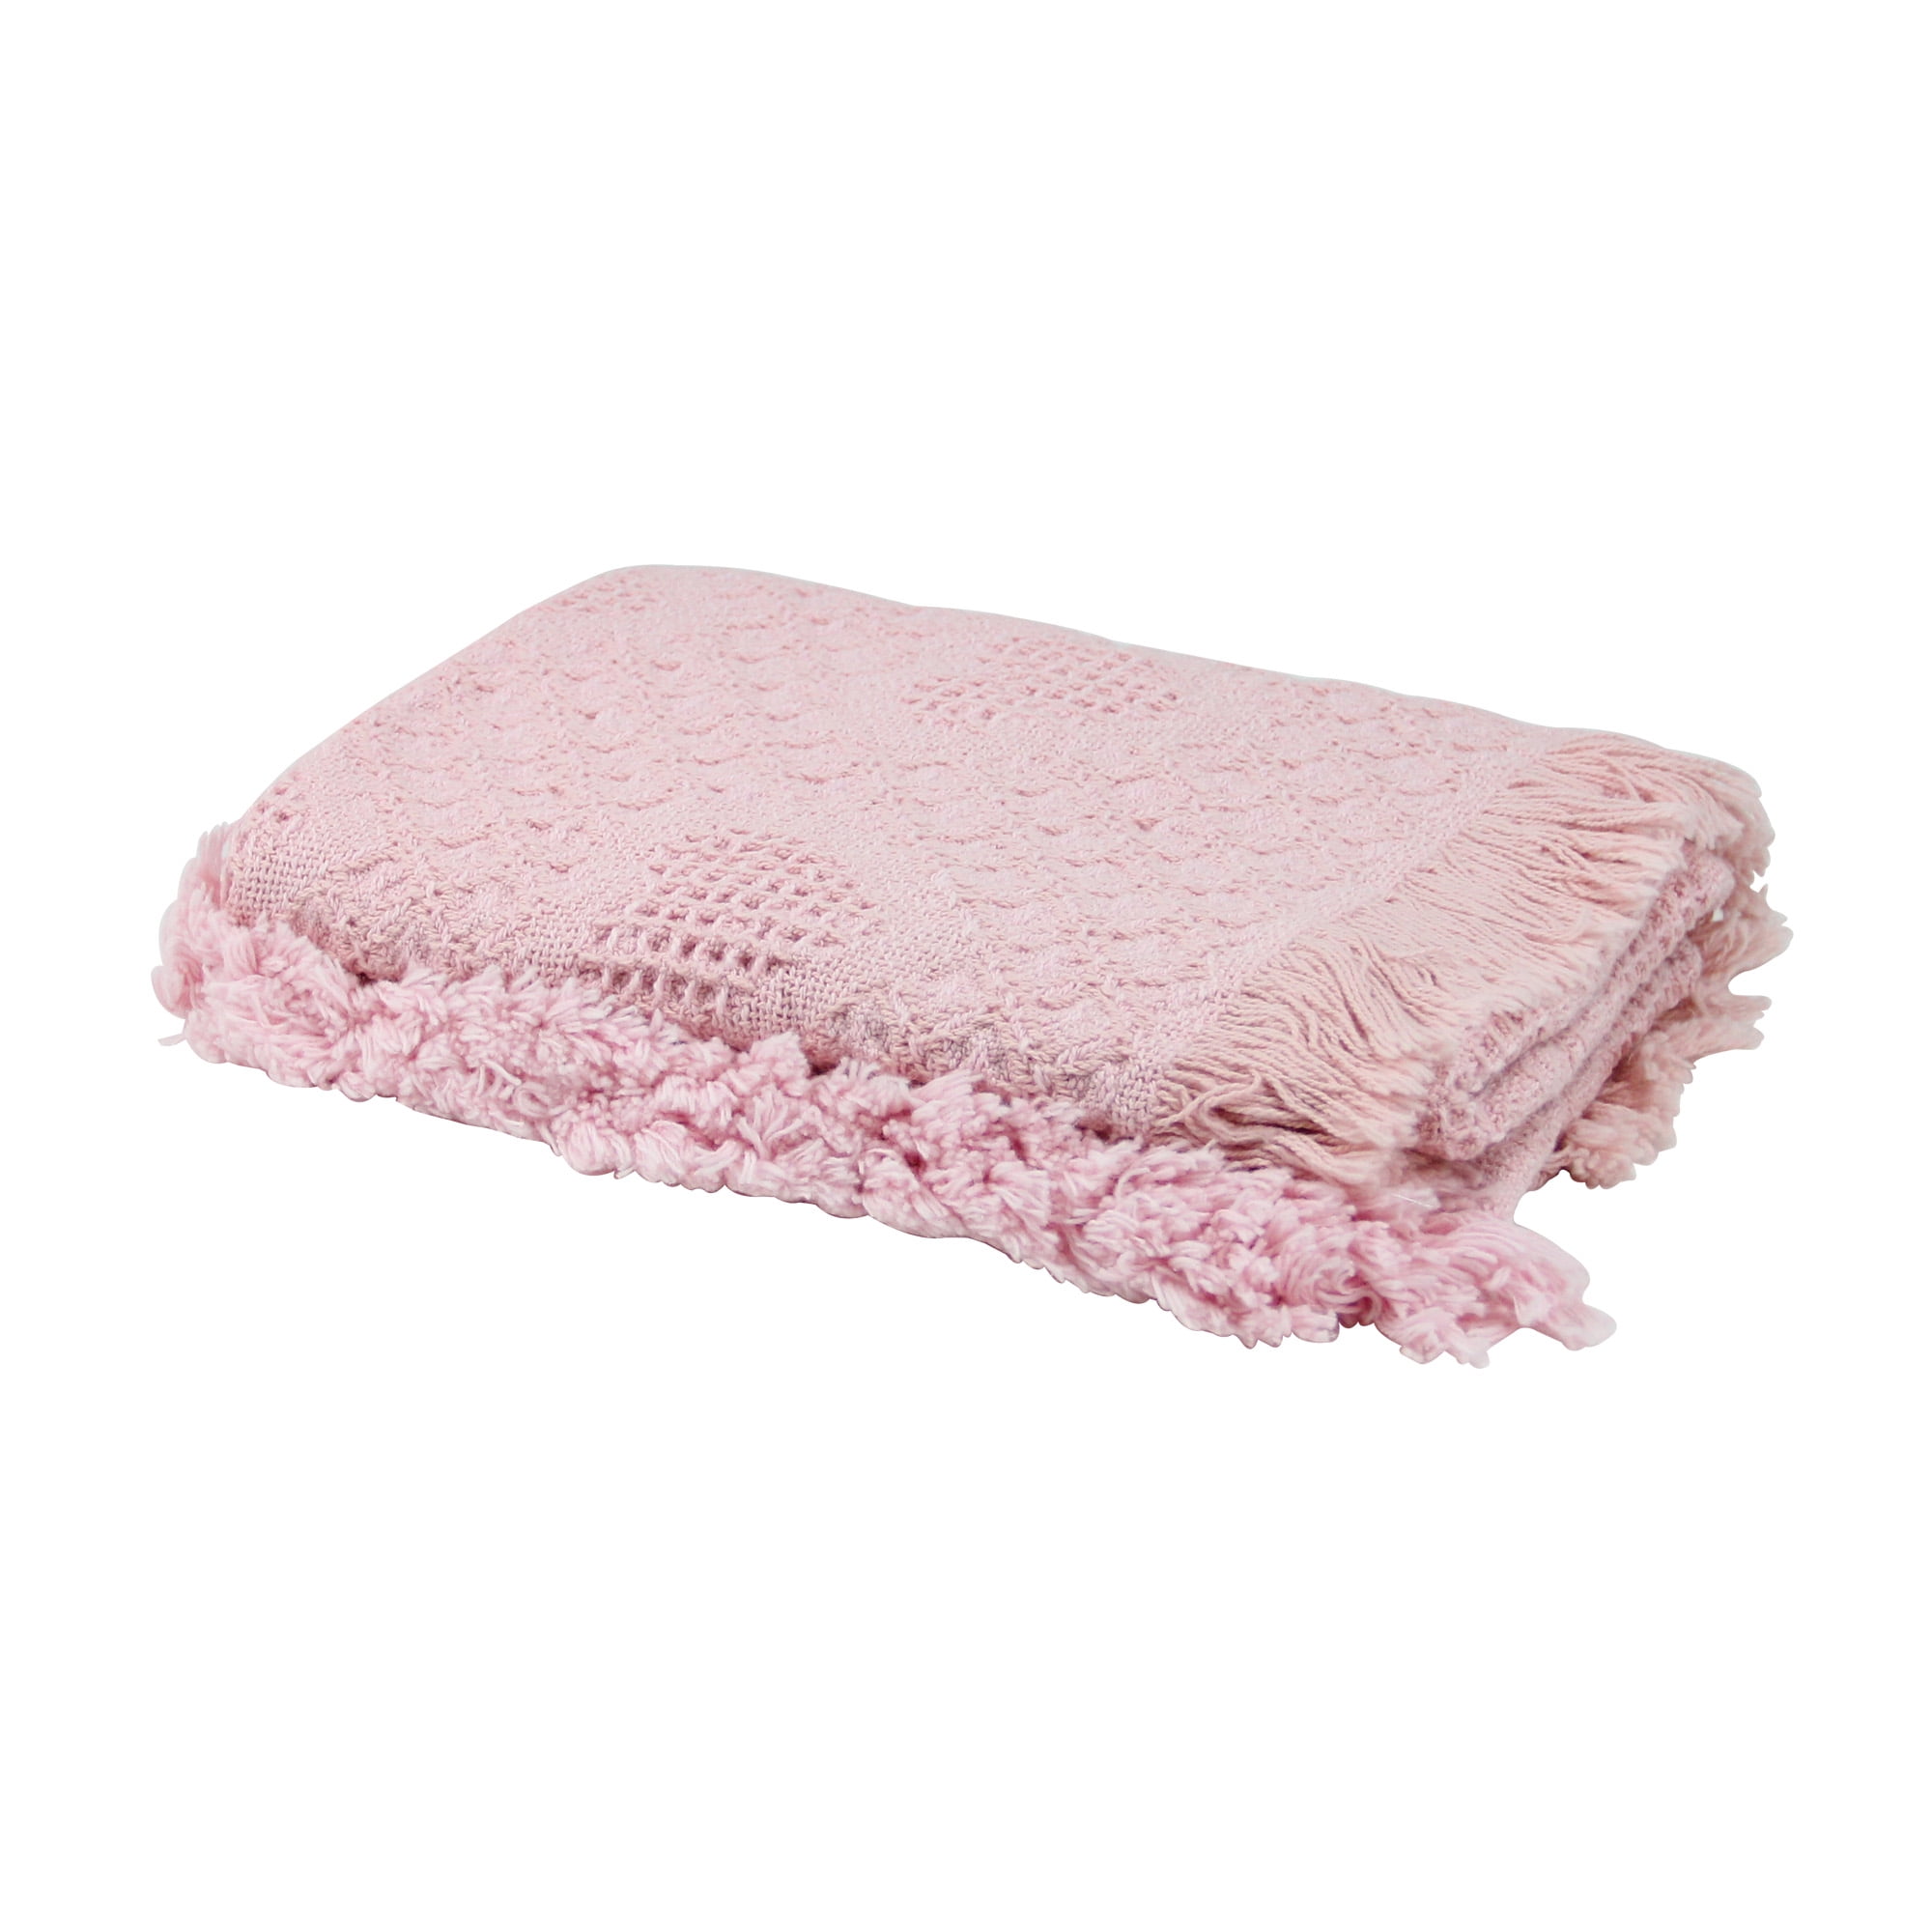 Pink Hearts Super Soft & Fluffy Large Patterned Baby Blanket 